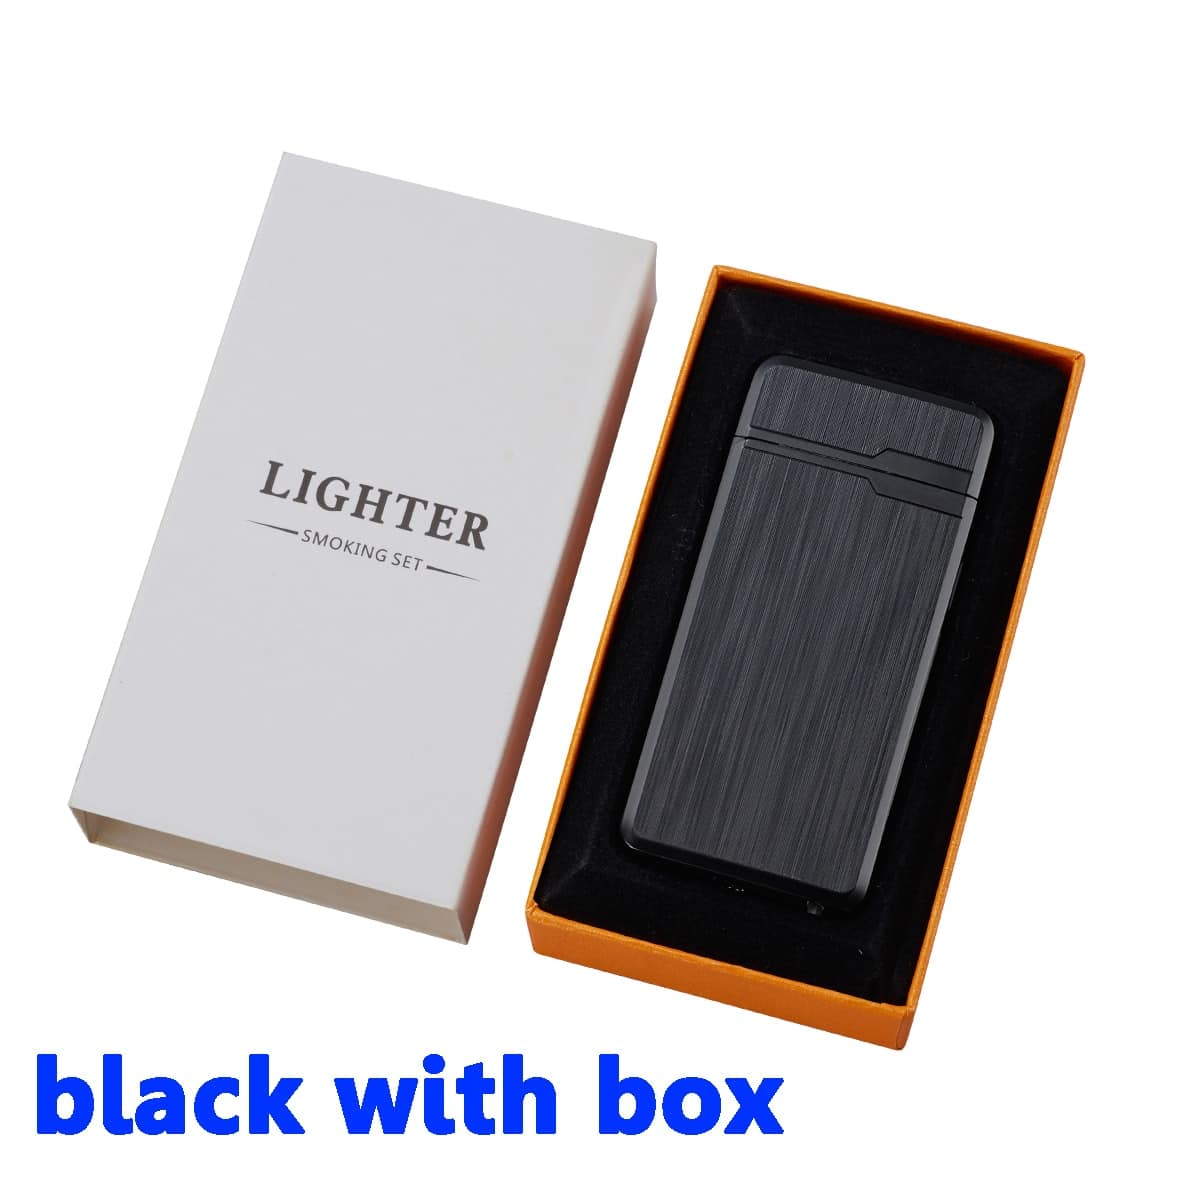 Black with box